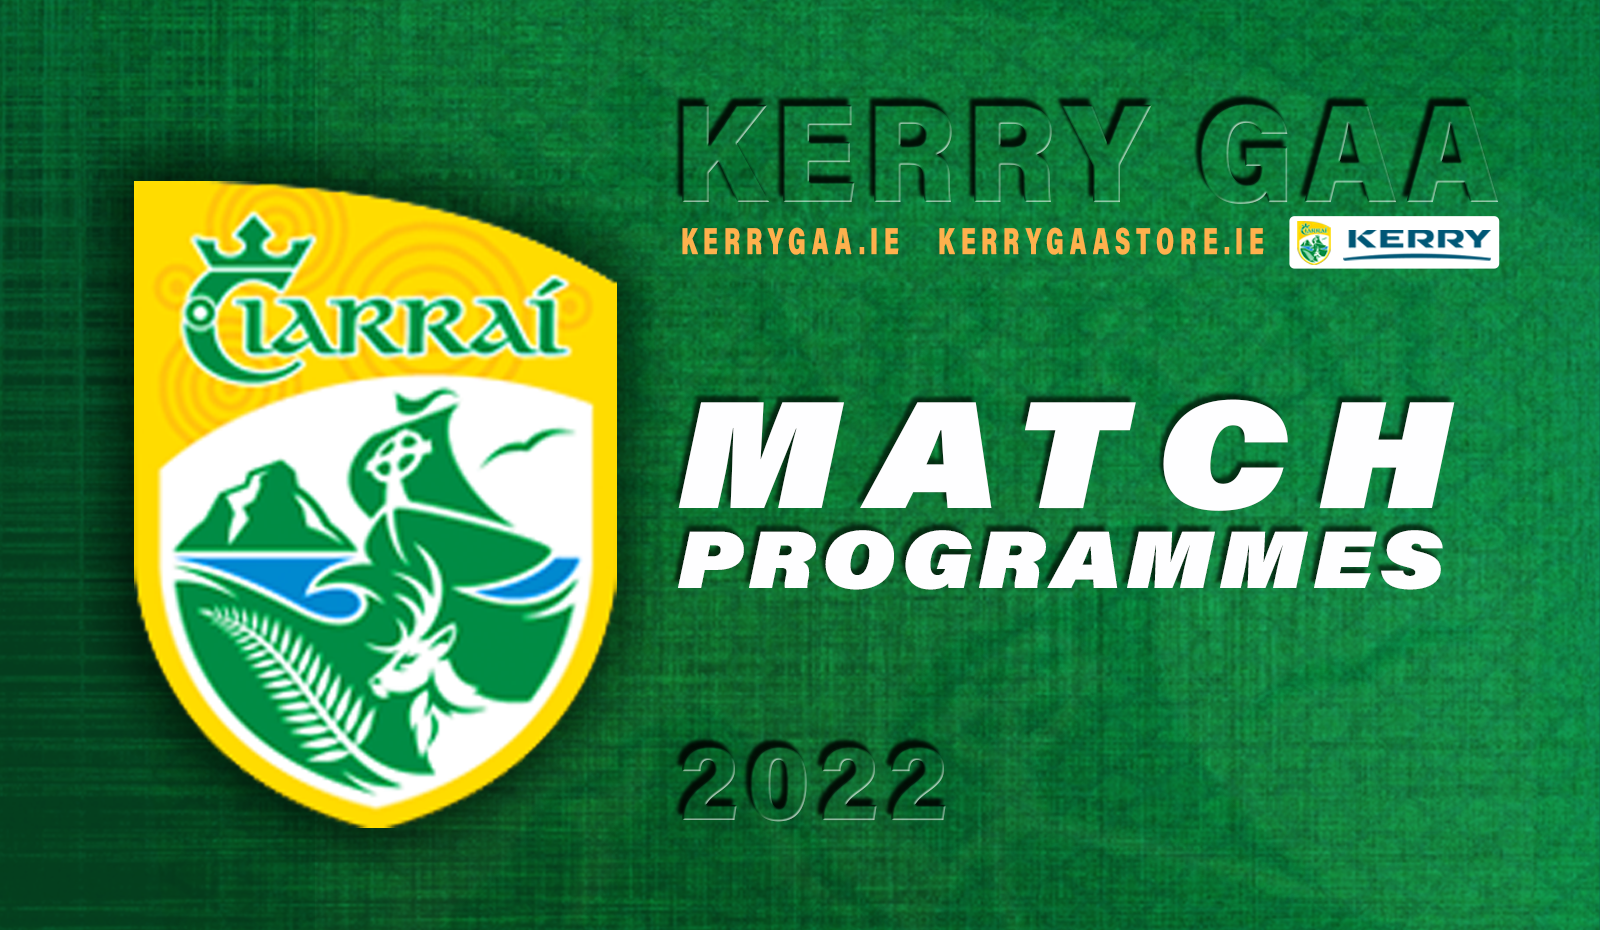 Kerry Petroleum Club Championships – Match Programmes for Sunday